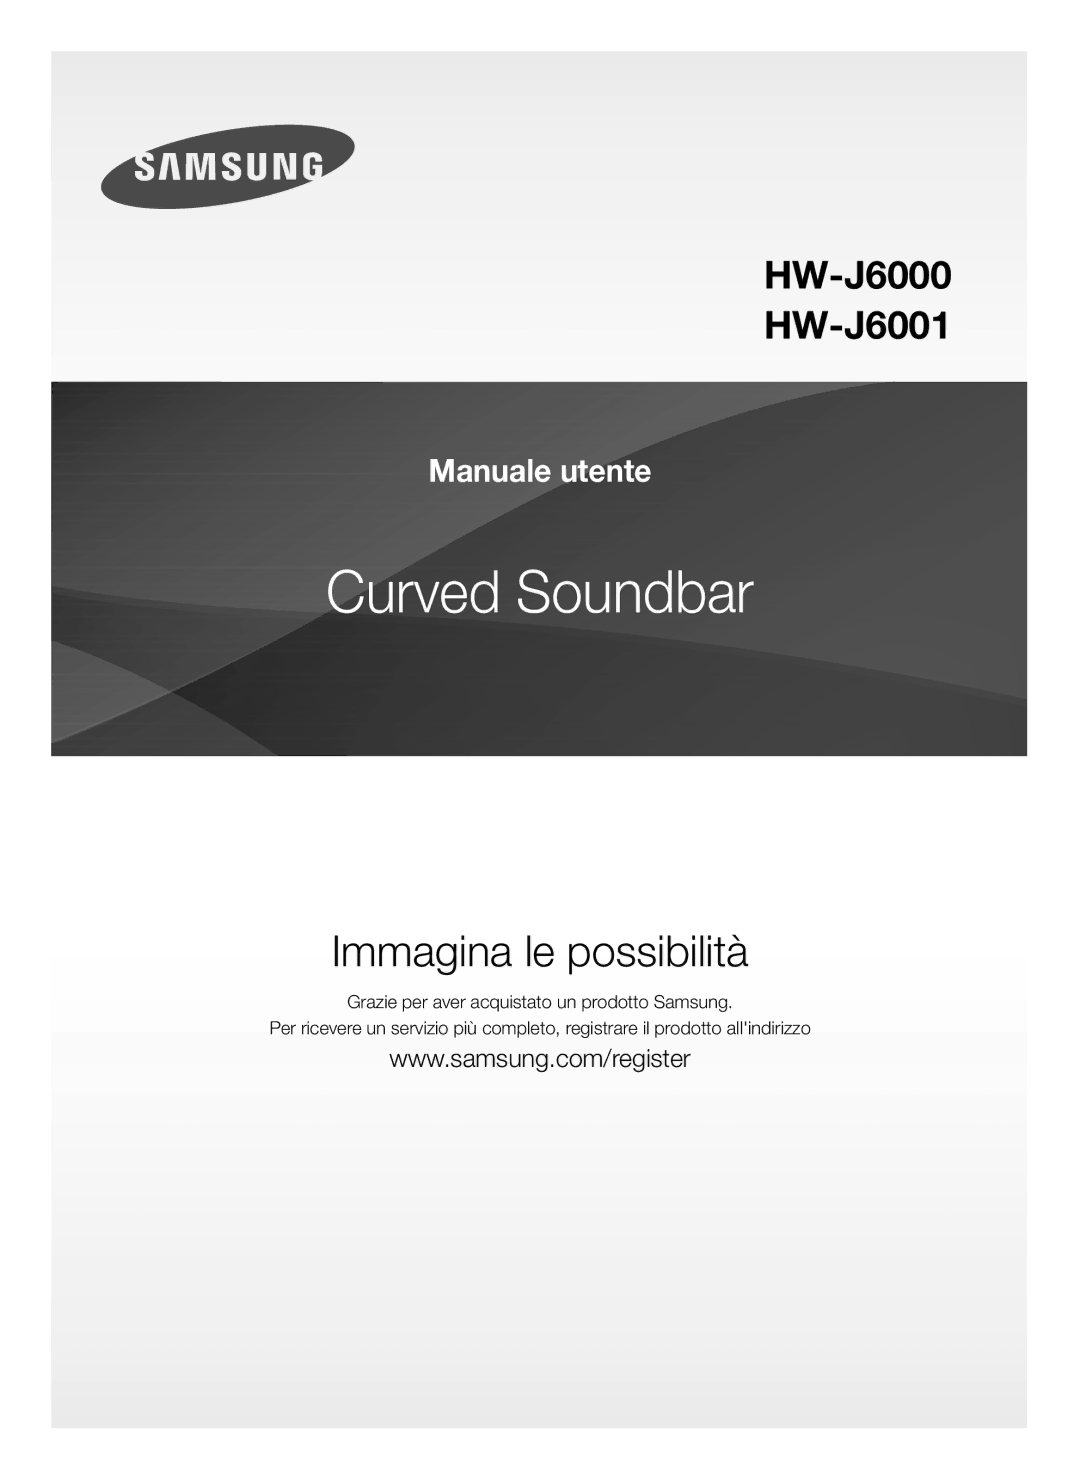 Samsung HW-J6000/ZF, HW-J6001/ZF manual Immagina le possibilità 